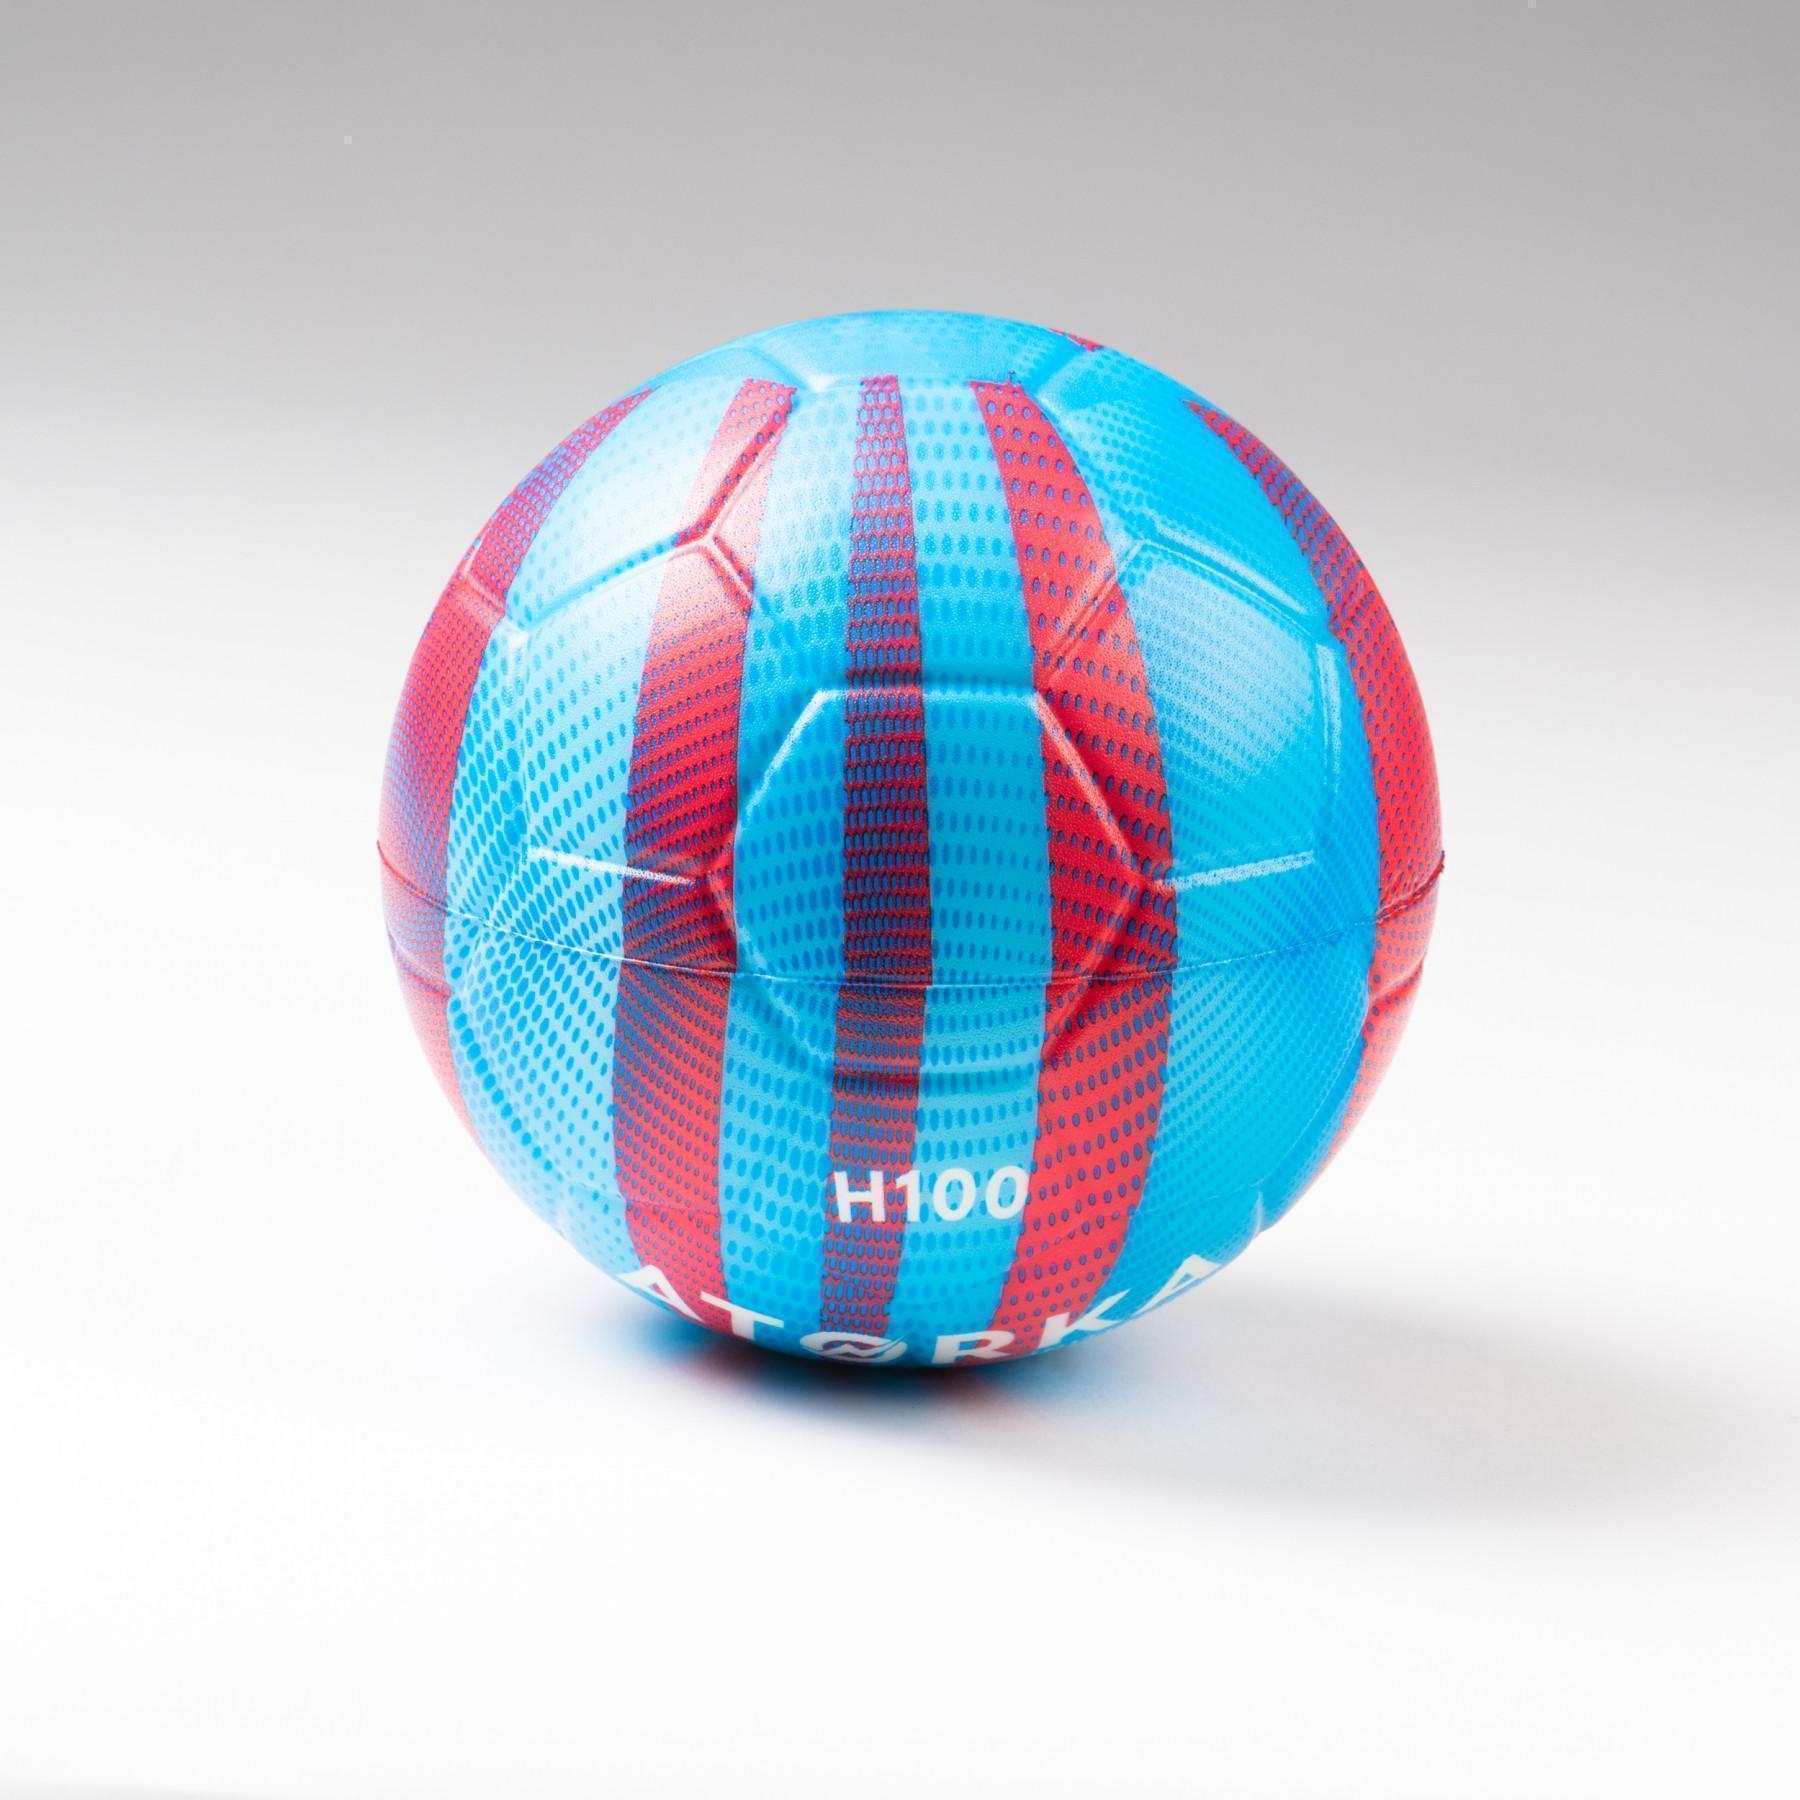 Pallone per bambini Atorka H100 INITIATION